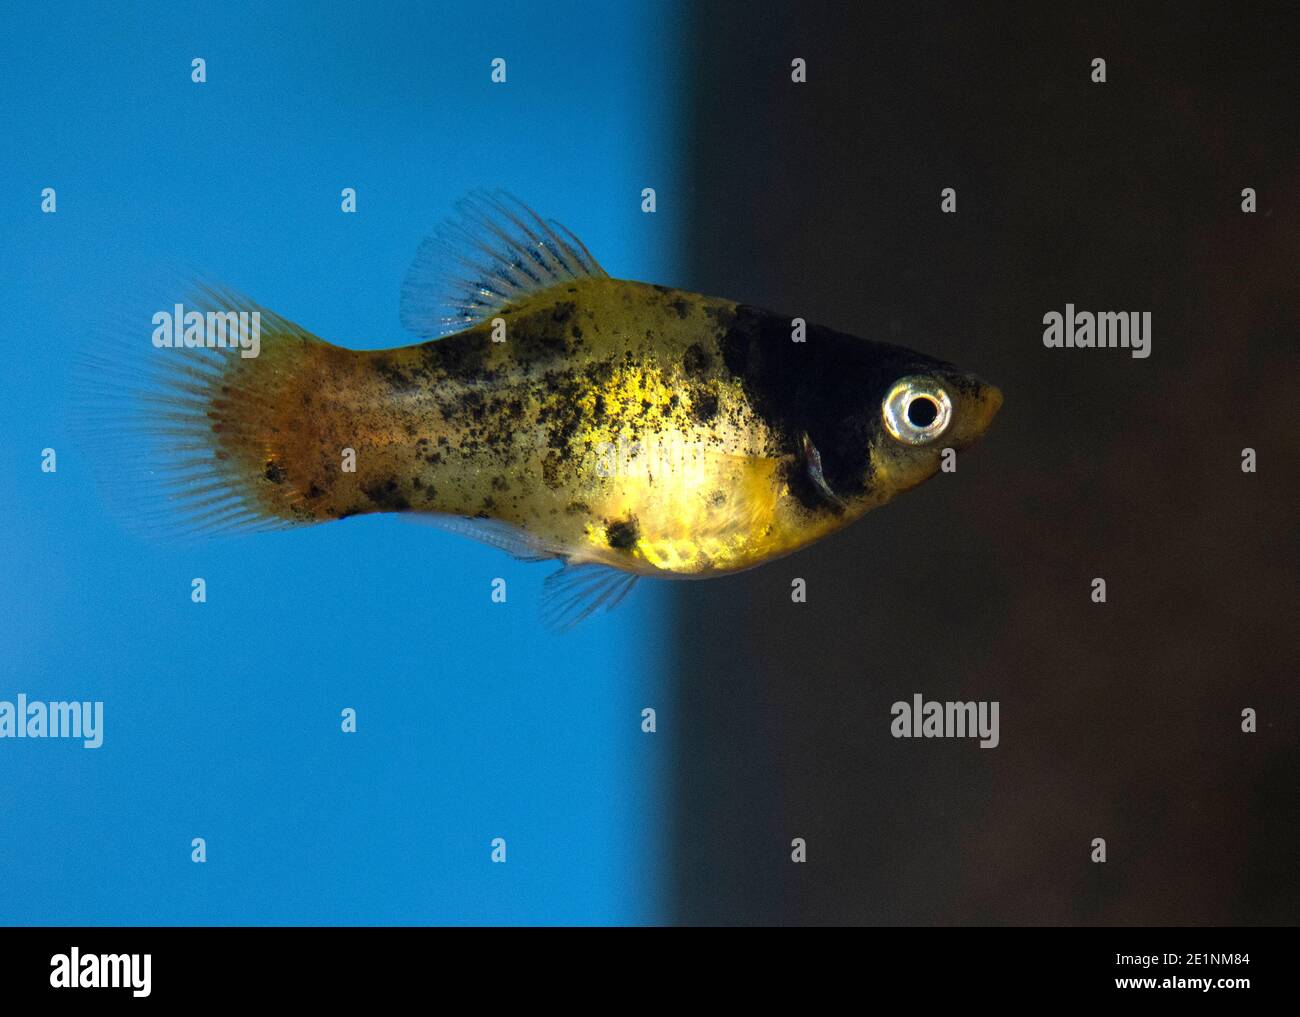 Platy (Xiphophorus maculatus) in freshwater aquarium Stock Photo